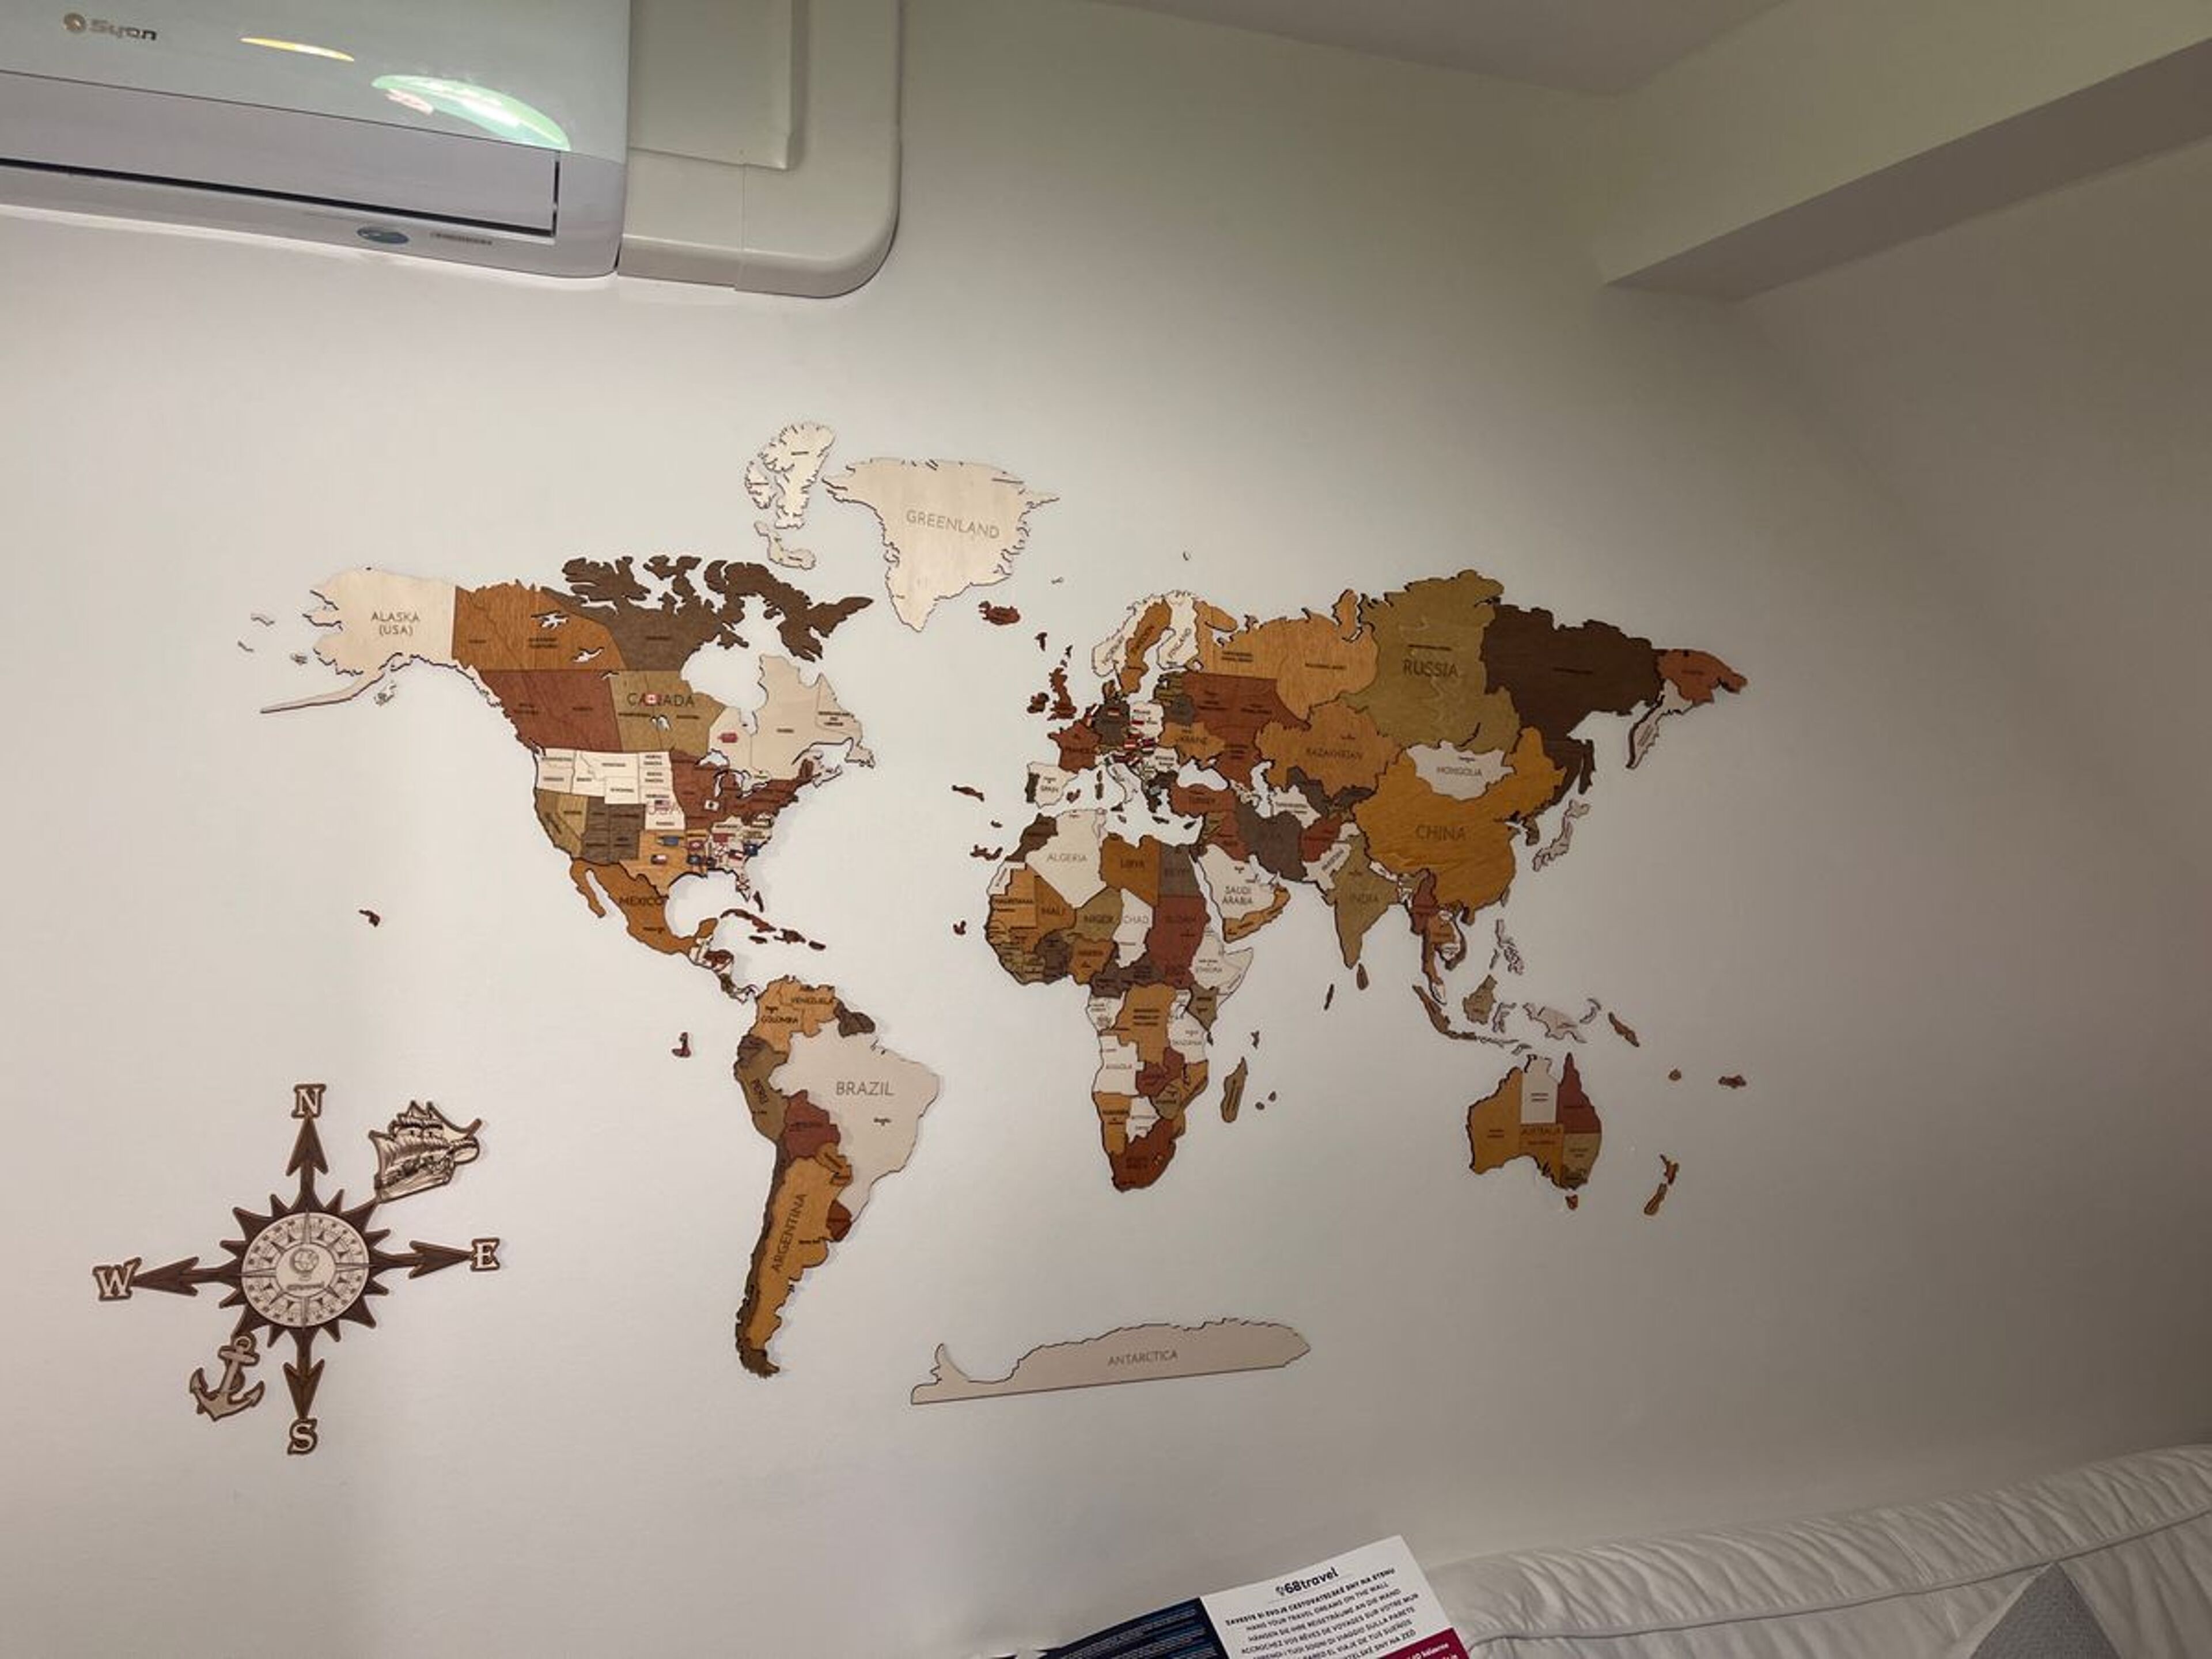 Reseña de Mapa del mundo de madera - imagen de Anonymous